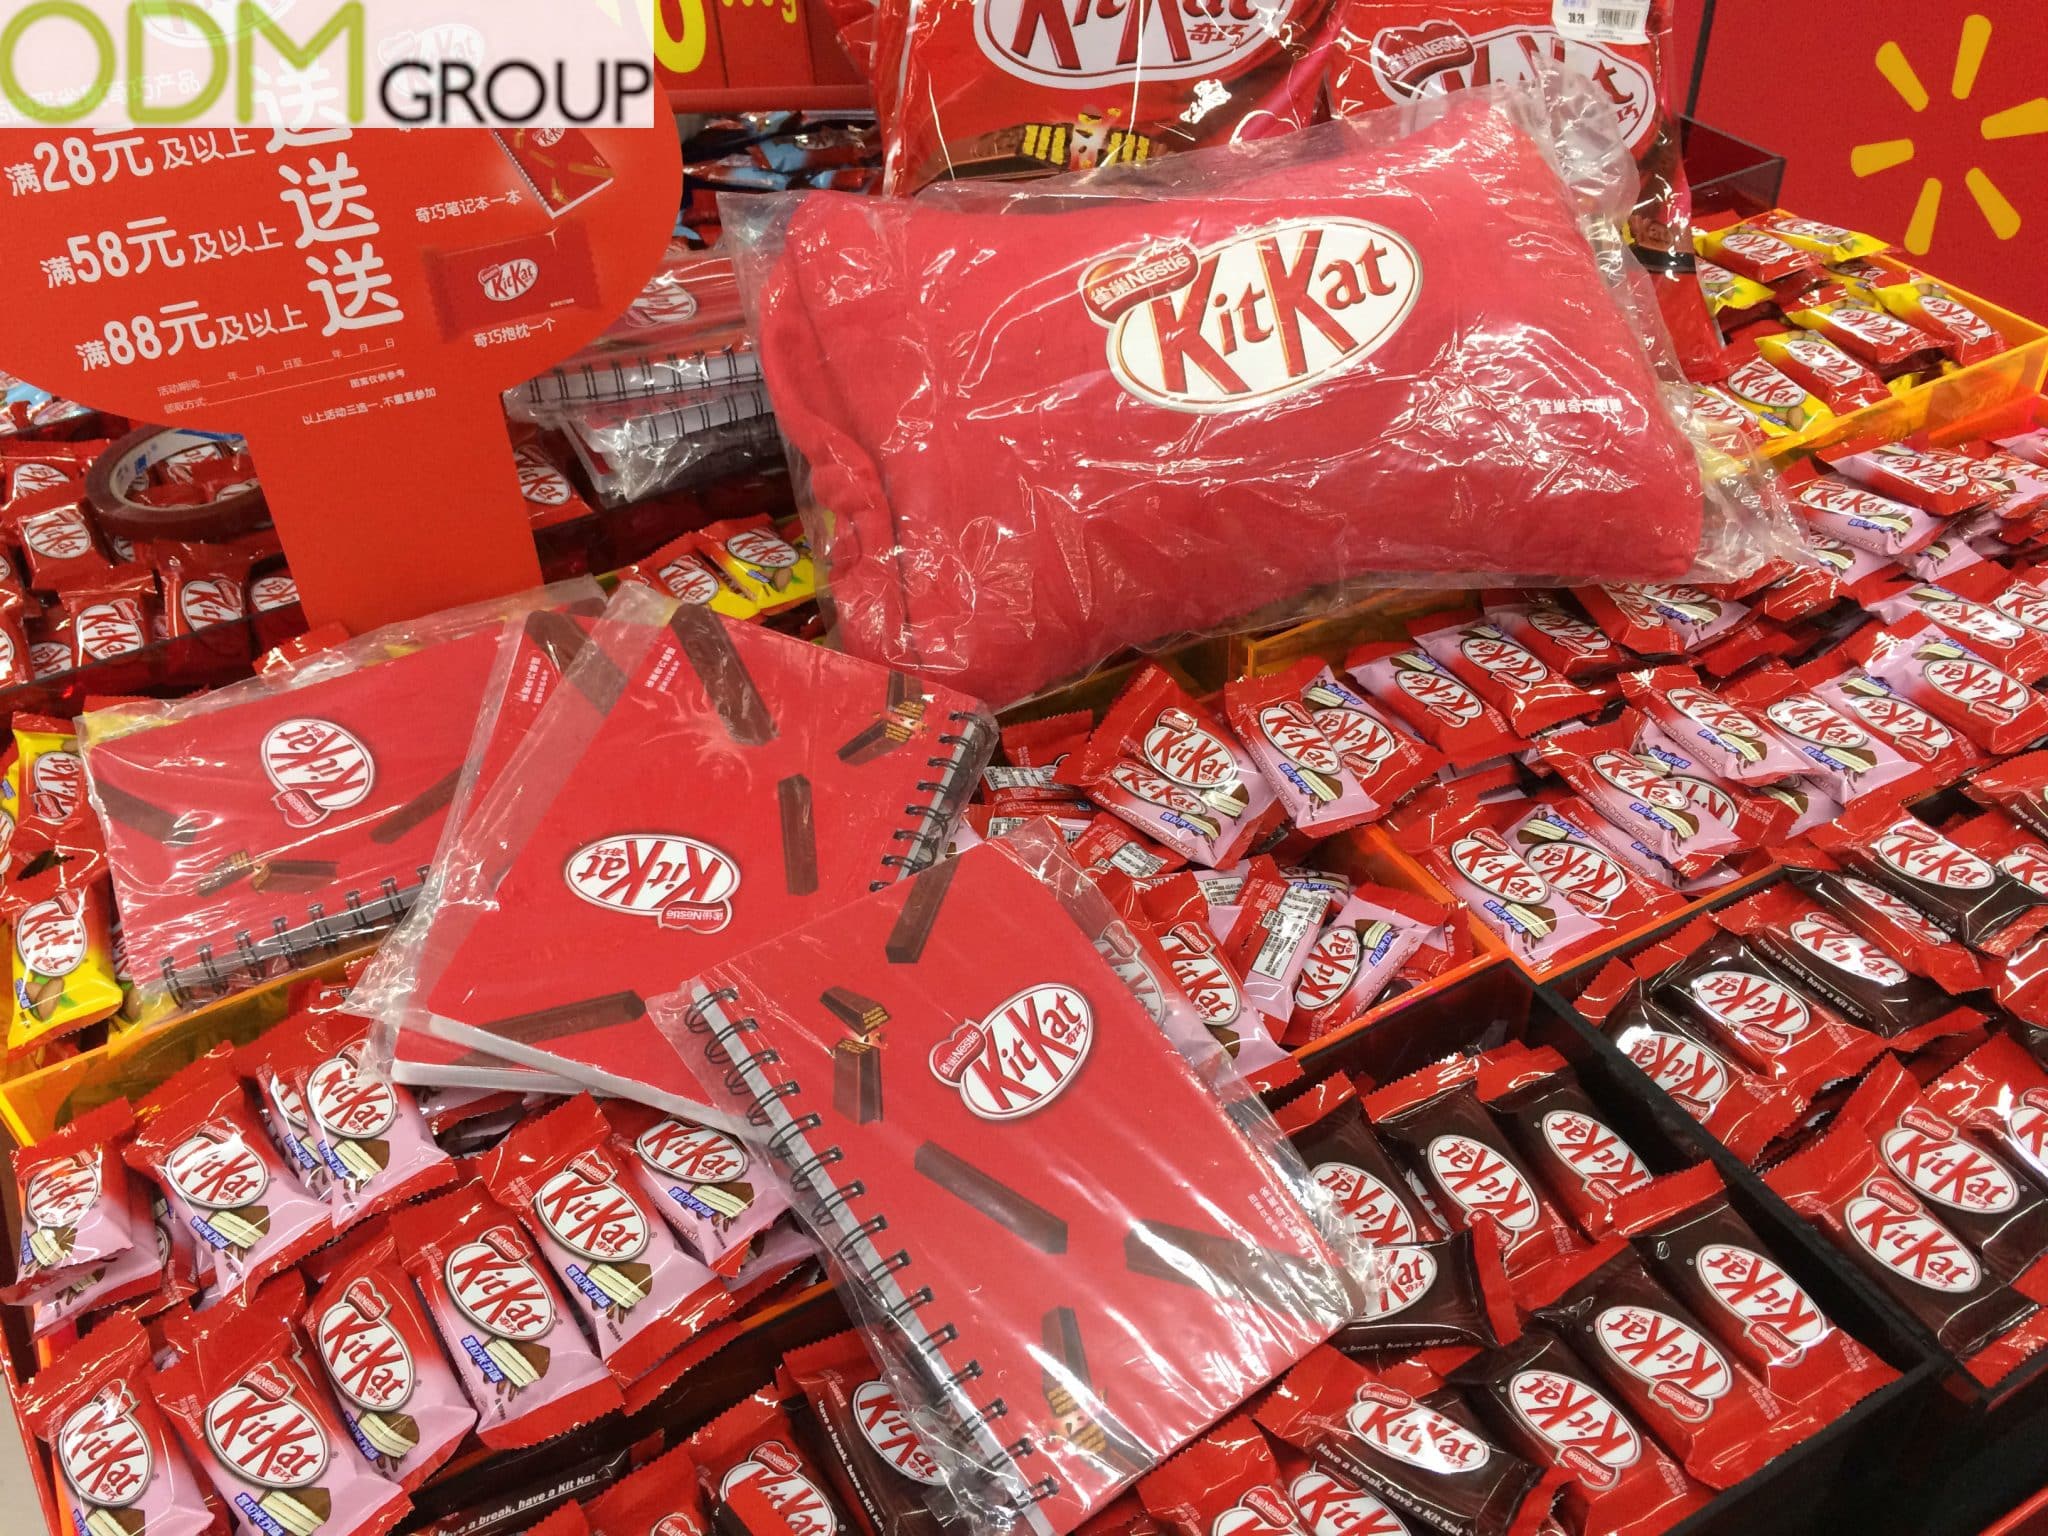 Kit Kat Promotional Products